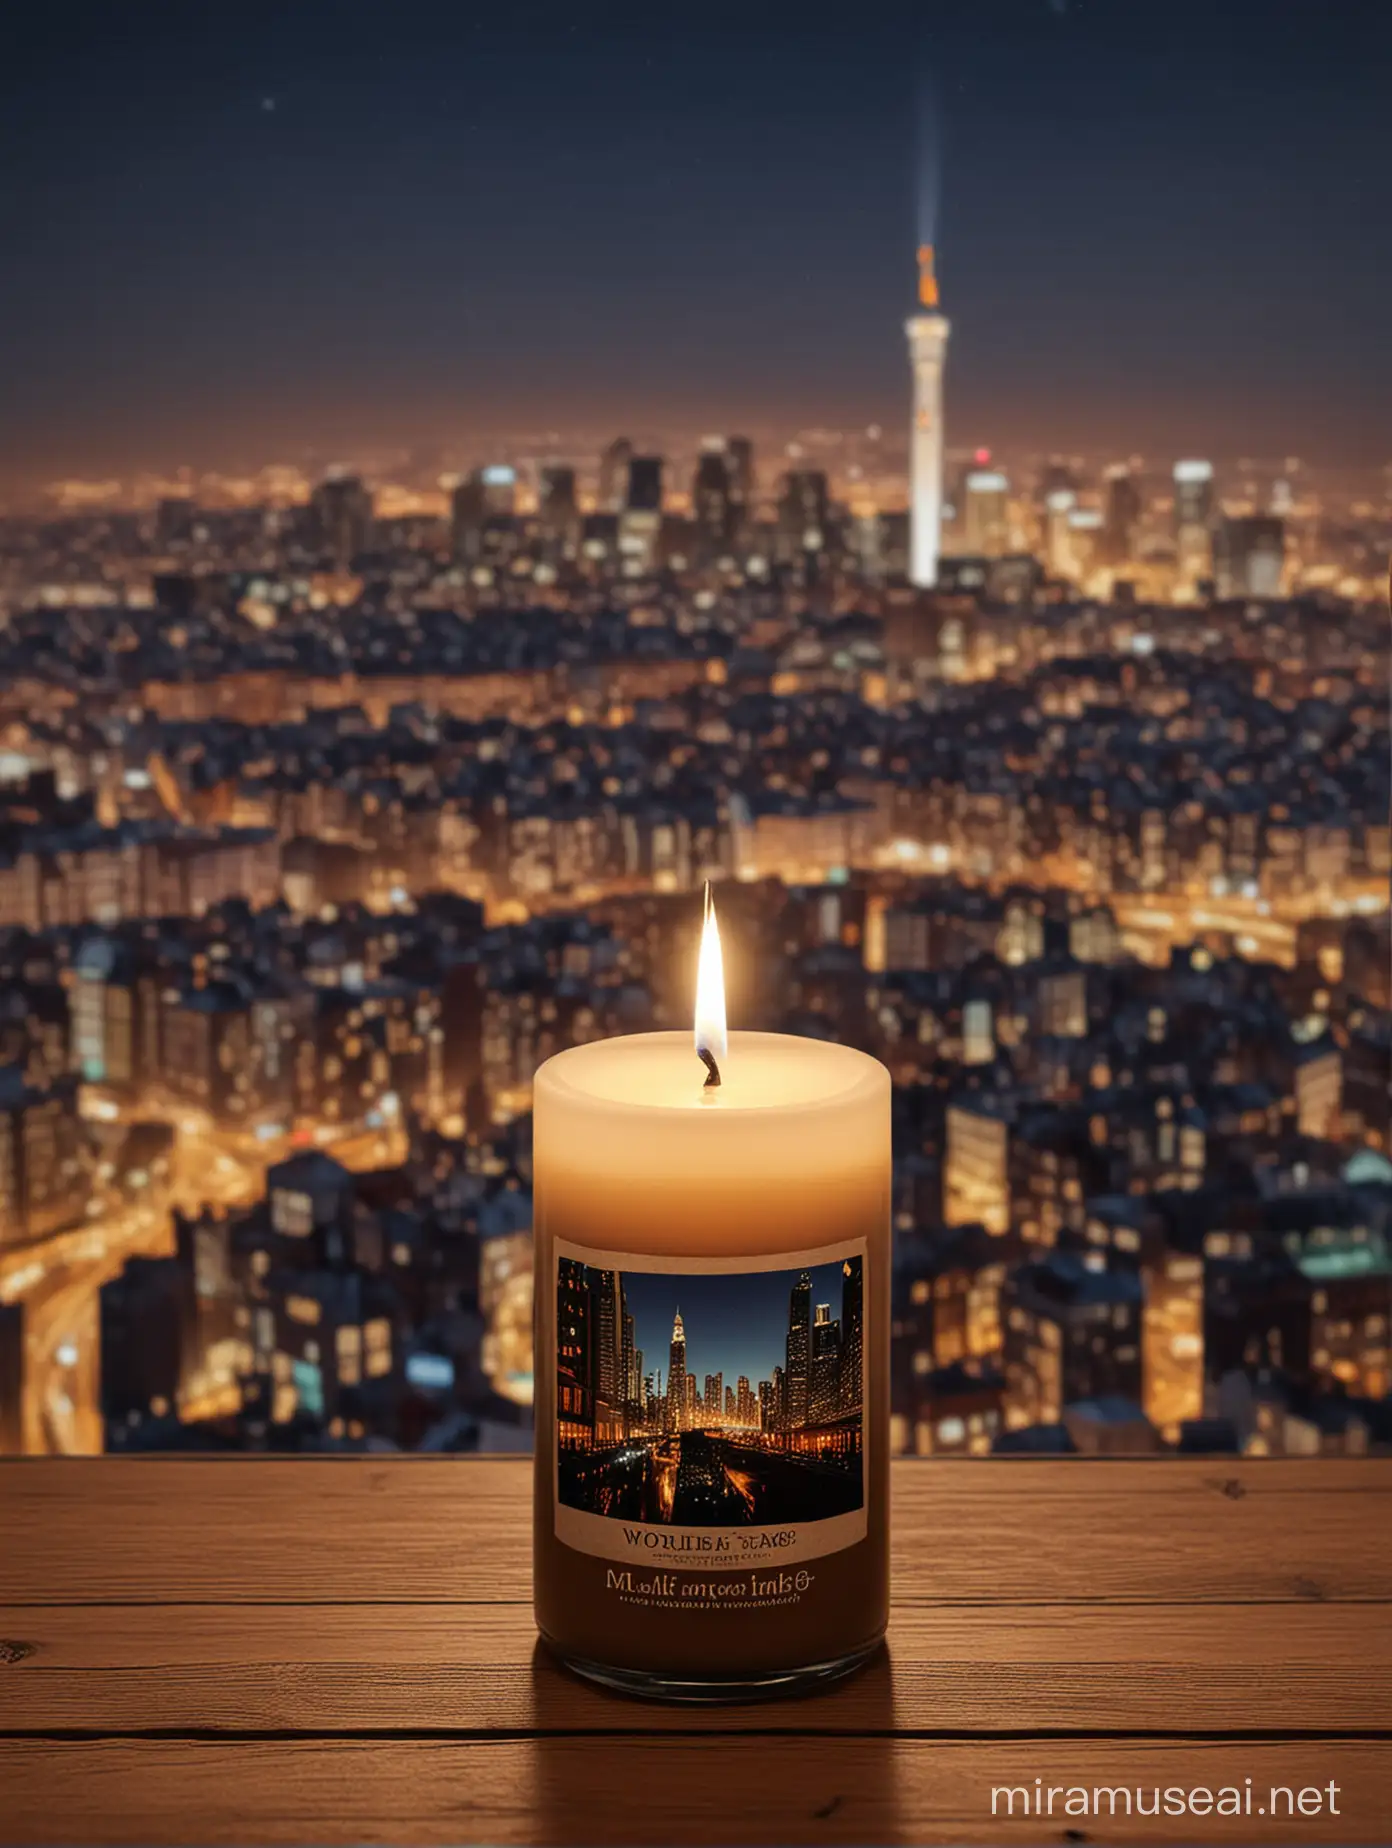 Candle Illuminating Night Cityscape on Wooden Table